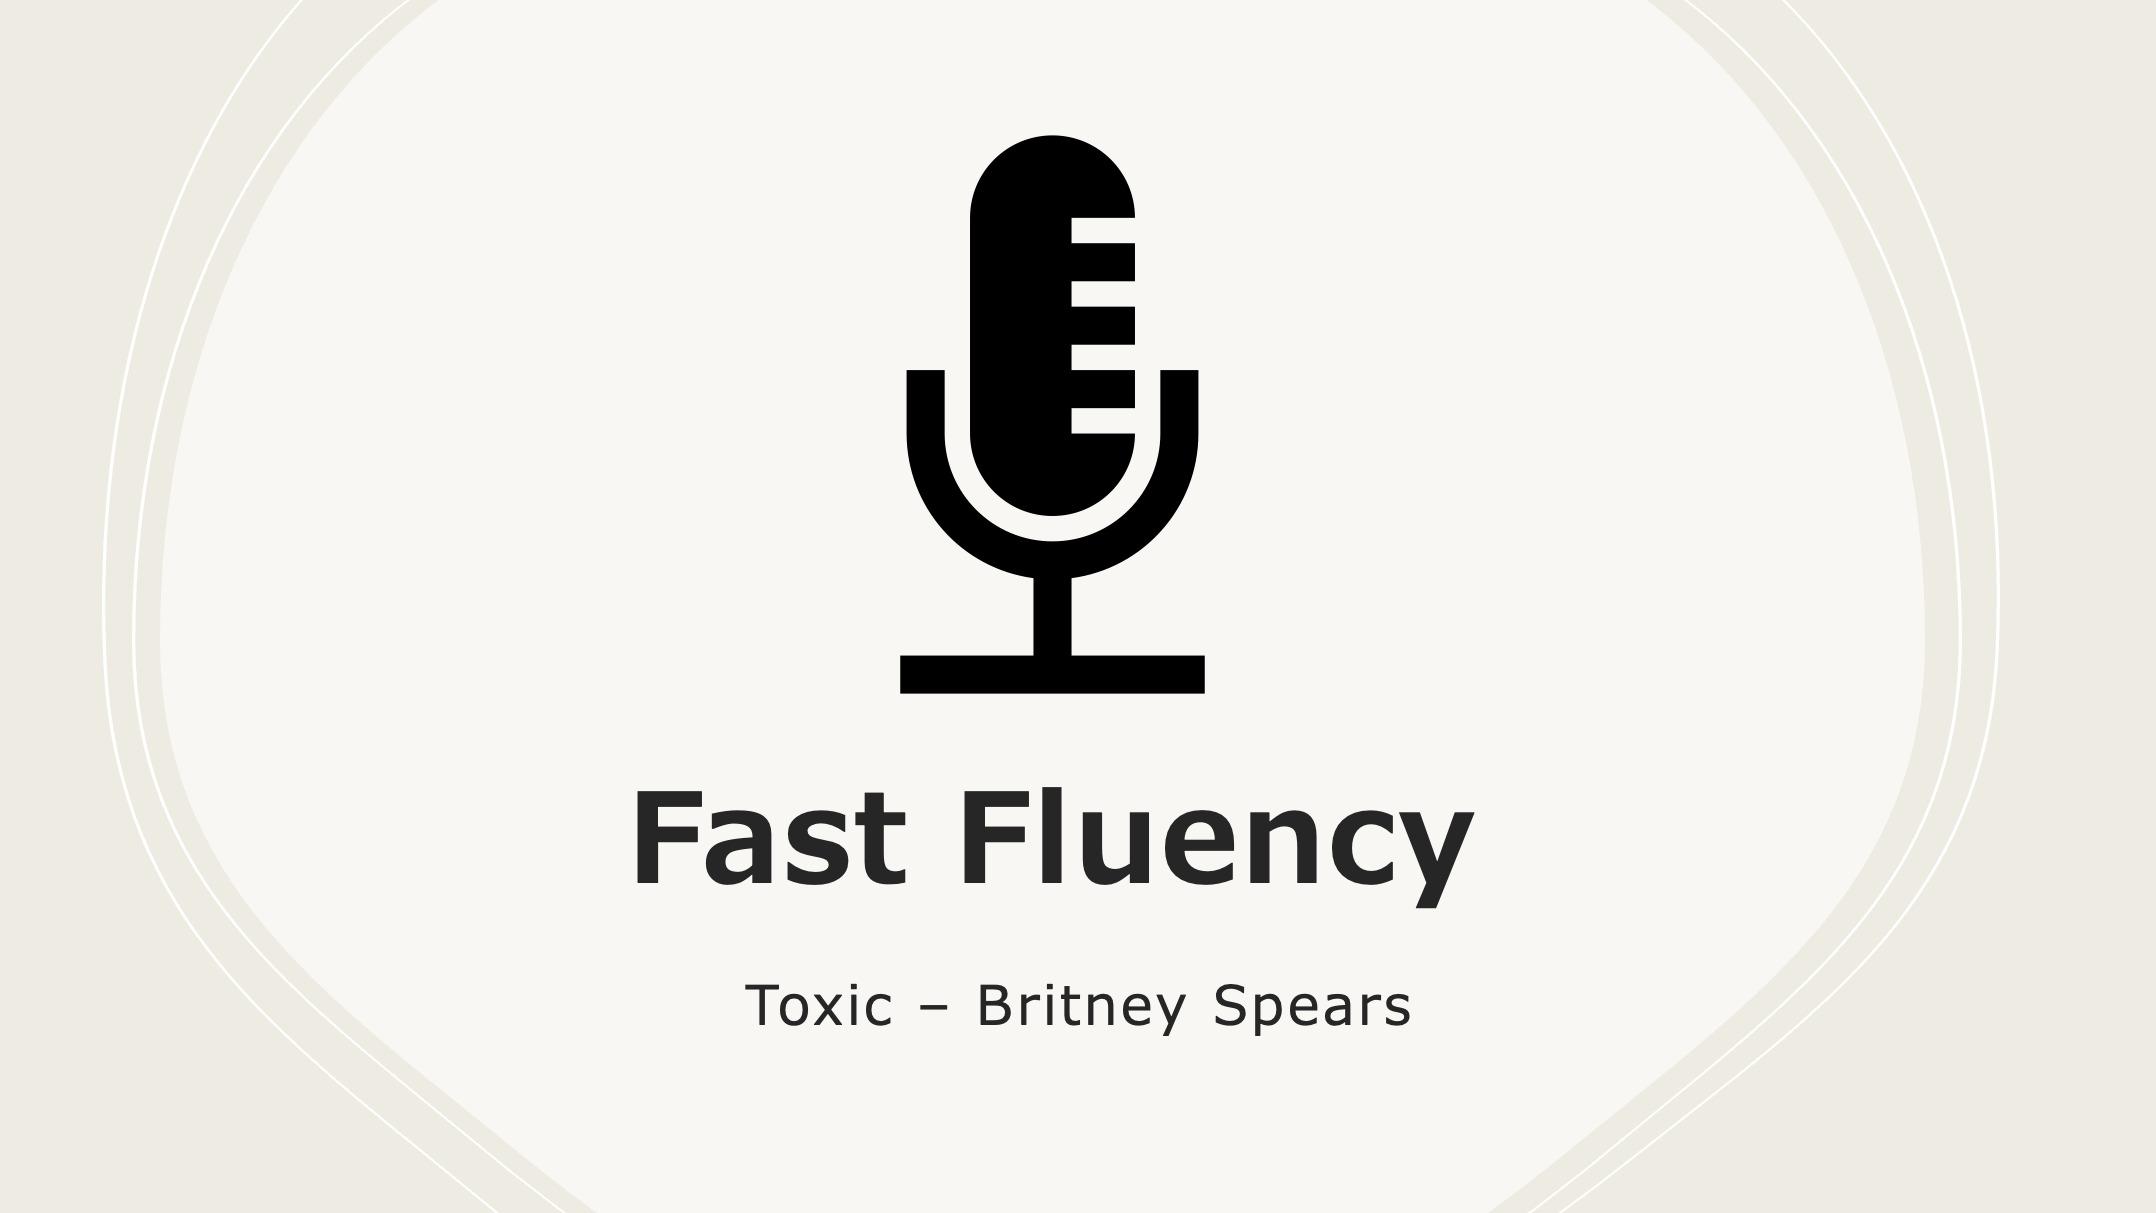 Fast Fluency: Toxic